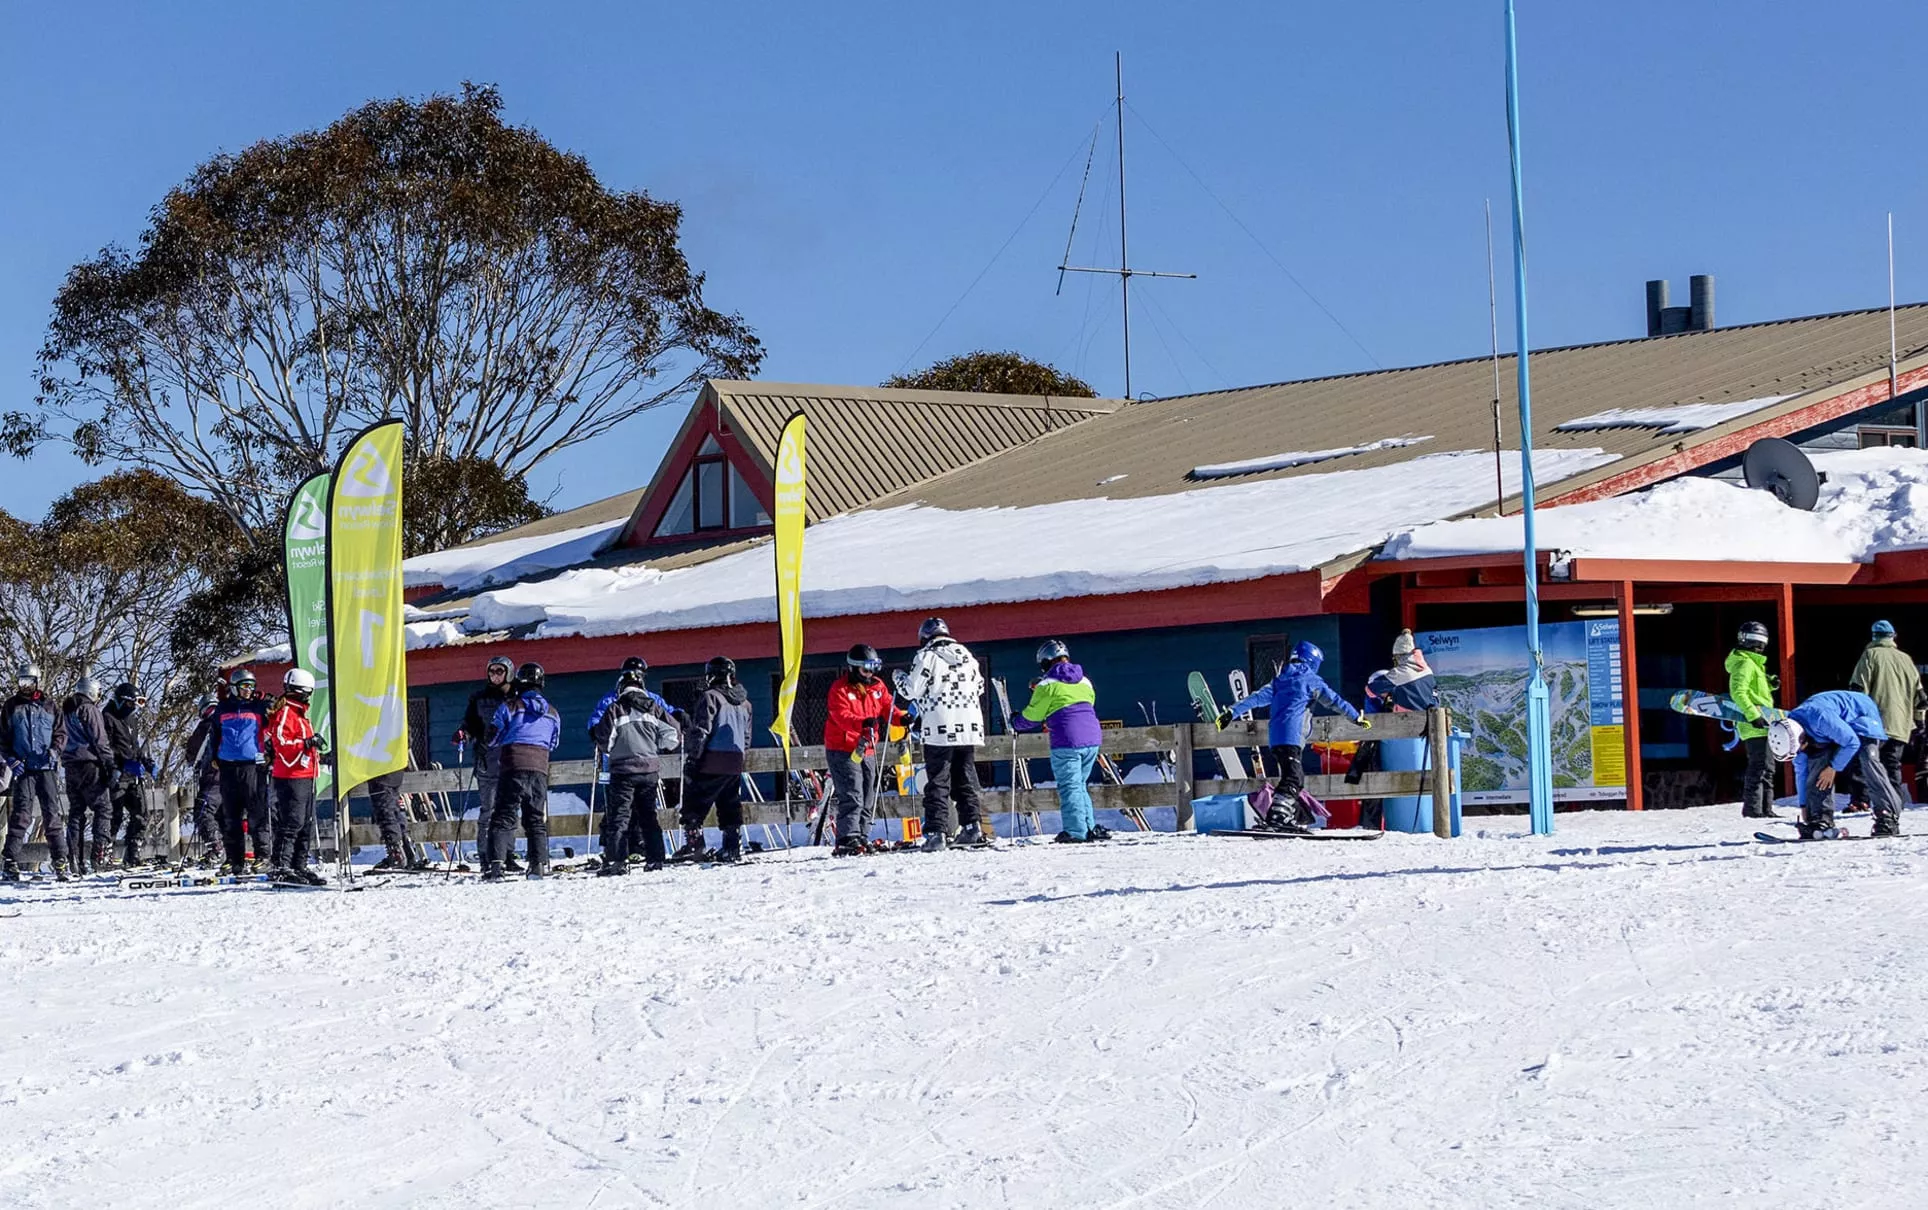 Selwyn Snow Resort in Australia, Australia and Oceania | Snowboarding,Skiing - Rated 3.4